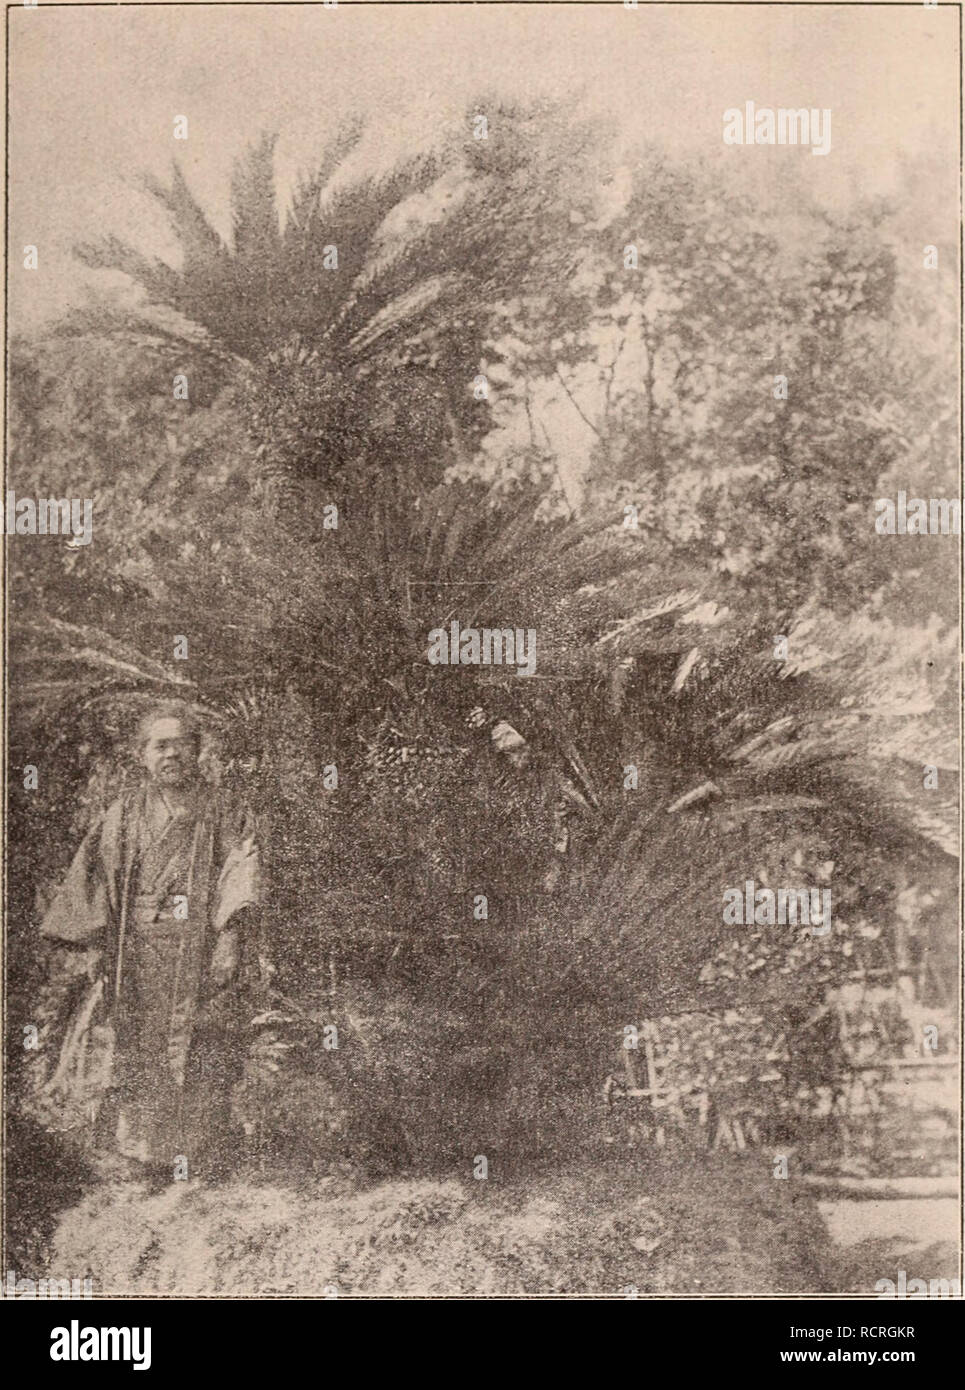 . Descriptive catalogue of flowering, ornamental trees, shrubs, bulbs, herbs, climbers, fruit trees, &amp;c., &amp;c., &amp;c. / for sale by the Yokohama Nursery Co., Limited.. Nursery Catalogue. CATAI.OGUE OF THE YOKOHAMA NURSERY Co., Ltd. (1912).. rii^lloutacliys aurea, variegata, varic- gciteil both leaves and stem—height: 2-2J ft.; per 10 $2.00. Faiiihiisa, Haiichiku, (Blotched ham boo) a variety of Phyllo- stachys Henonis witii dark blotches on the steam, one of the best garden varieties : — per 10, $2.20 ; per 100, $20.00. IJambiiSii i^ygniaea, ornamental grassy bamboo 3-5 inclics high ( Stock Photo